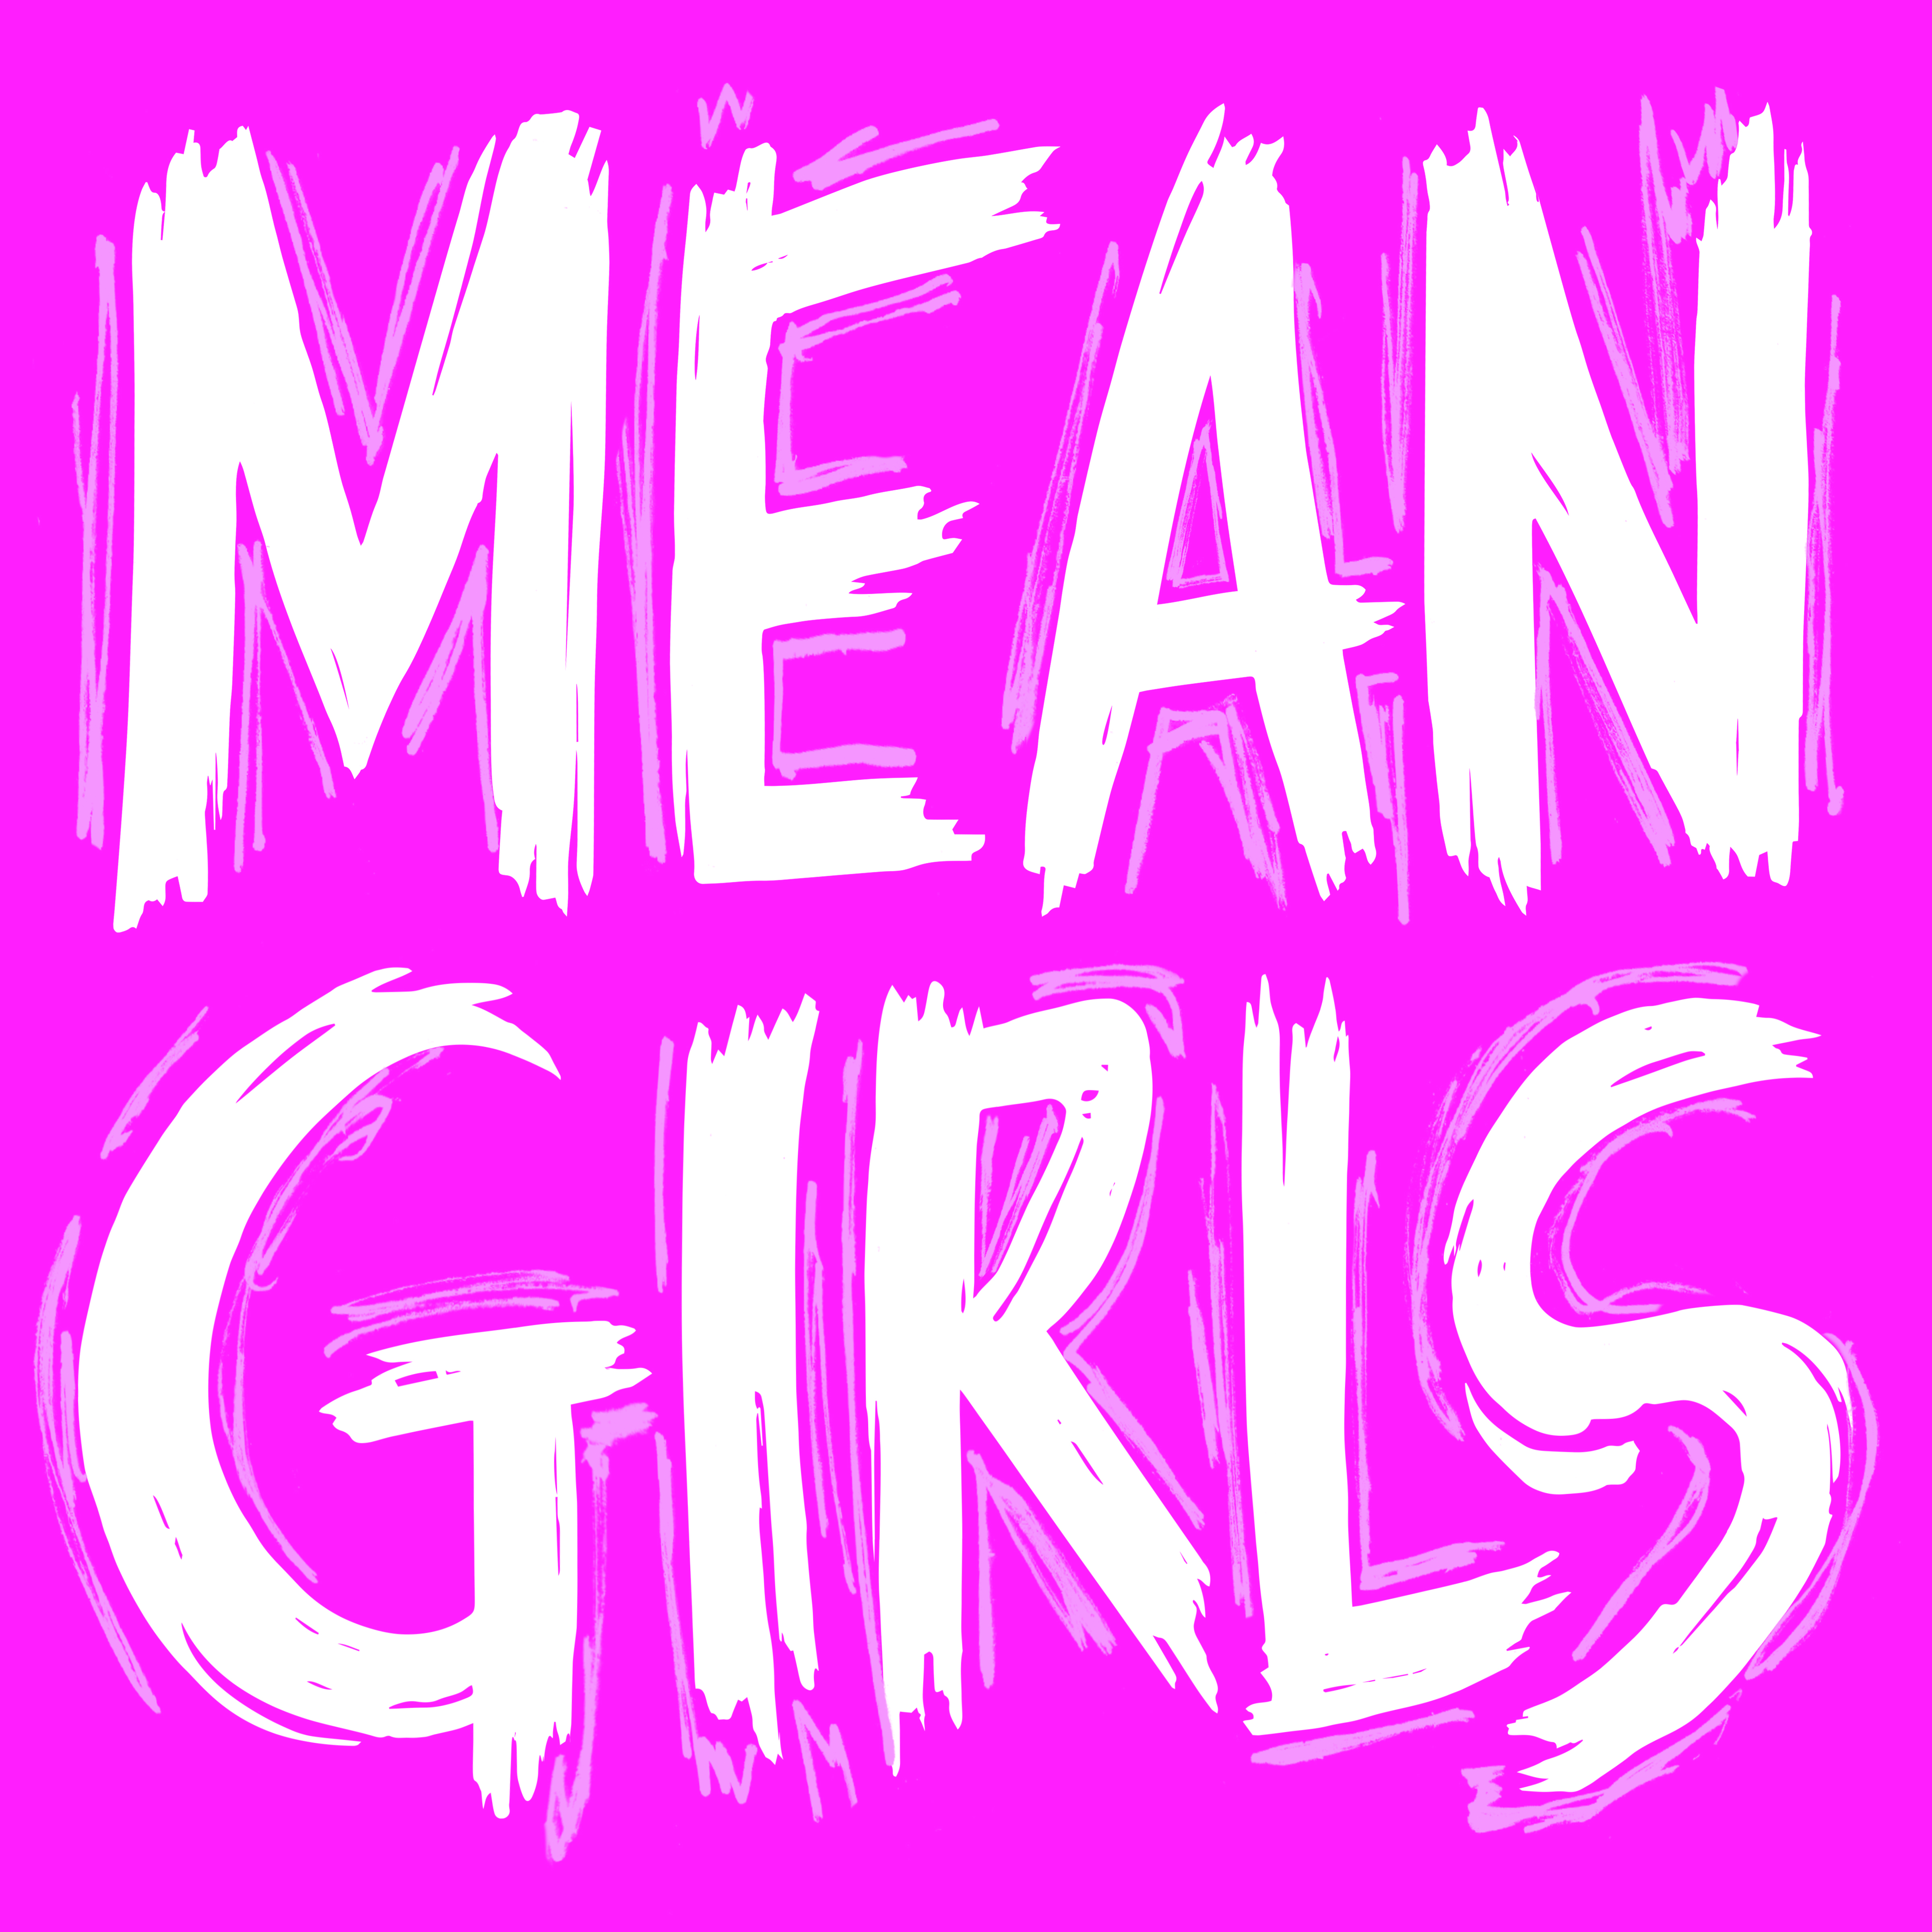 Mean Girls National Tour, launching September 2023! - Mean Girls National Tour - Company Manager